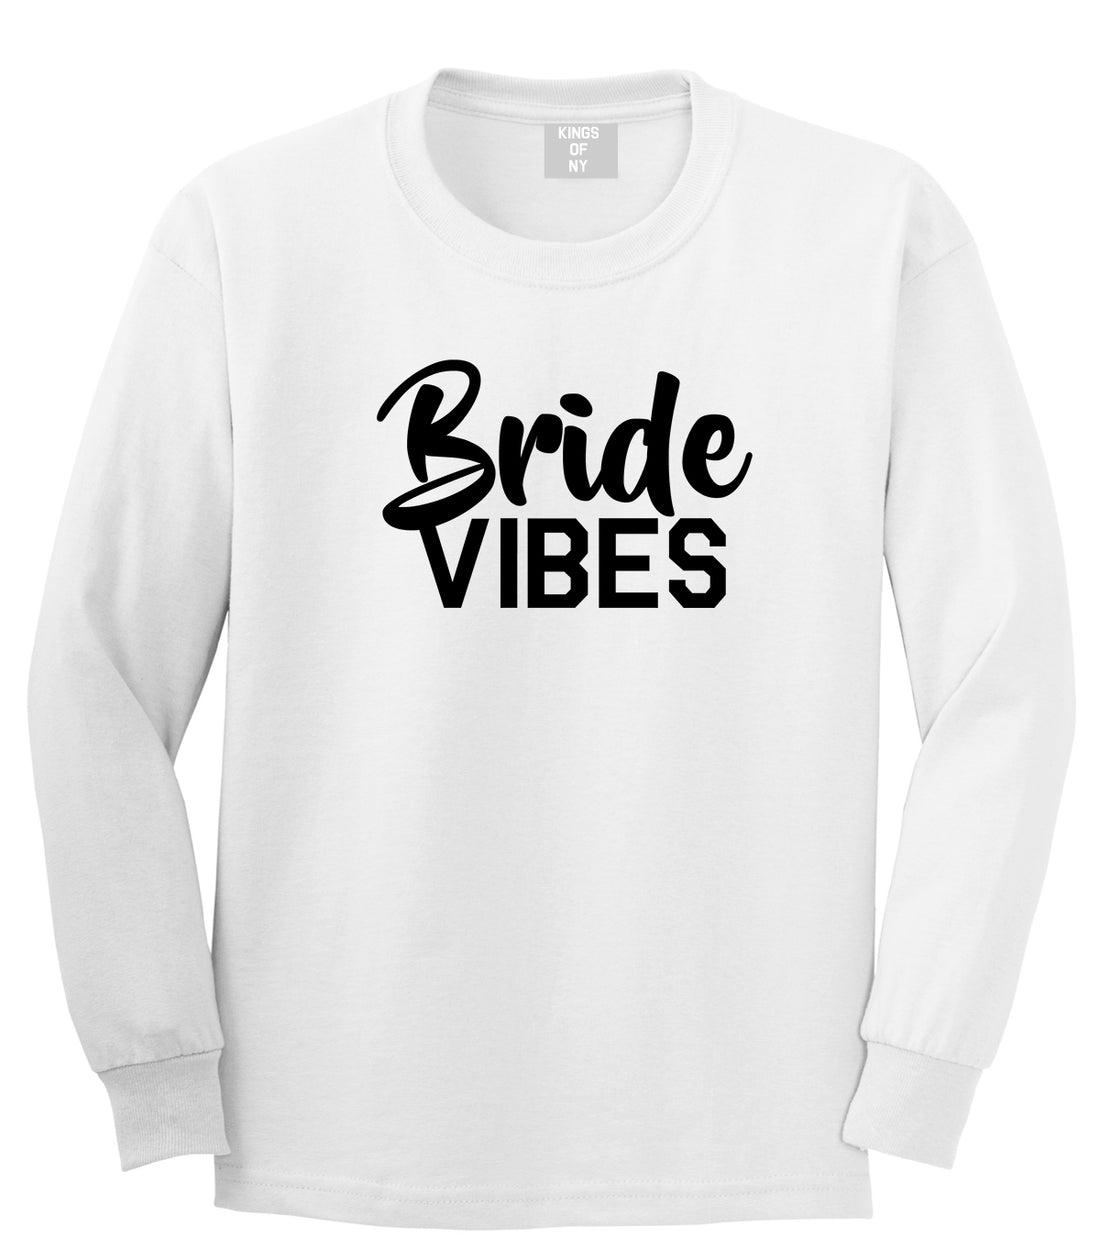 Bride Vibes Bridal Mens White Long Sleeve T-Shirt by KINGS OF NY